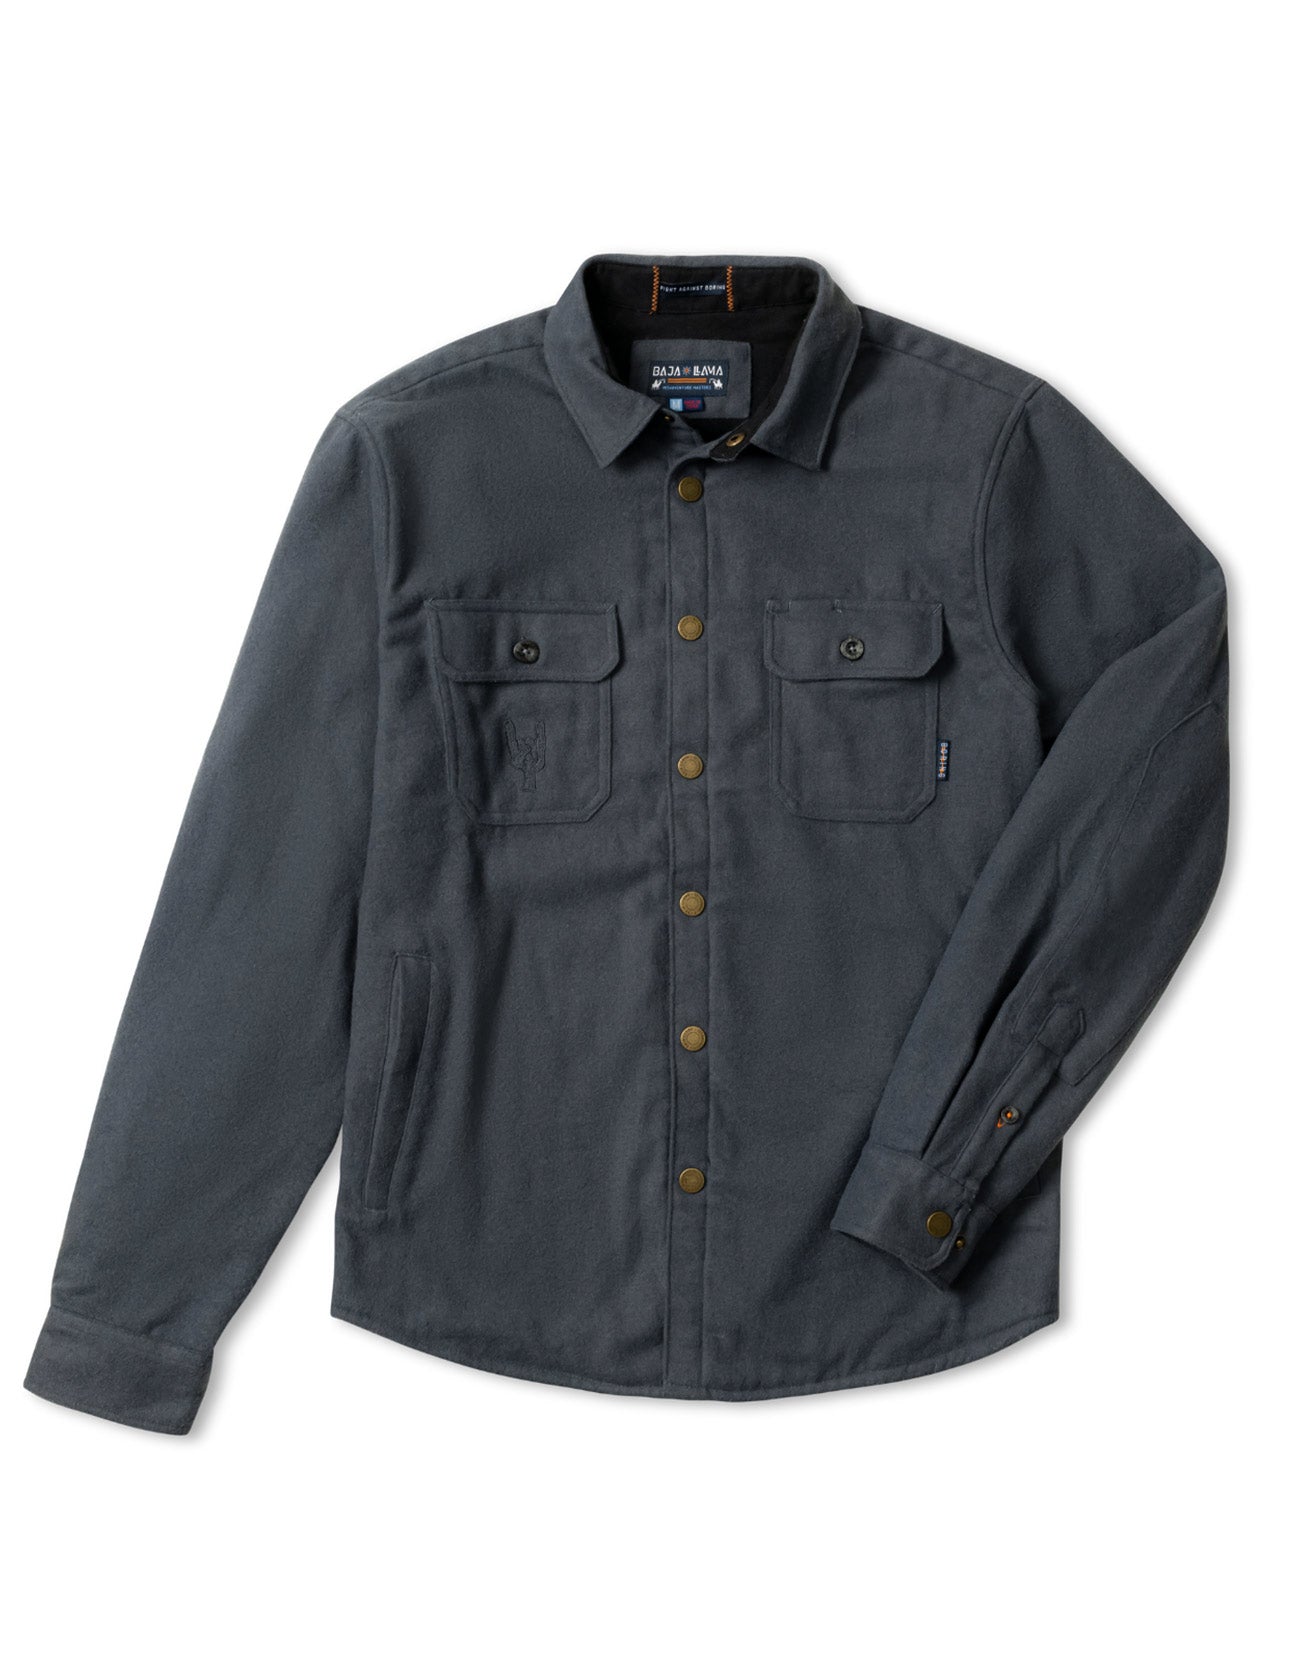 Baja Llama Black Wool Mid/Heavyweight RoadRunner Flannel Shirt Jacket